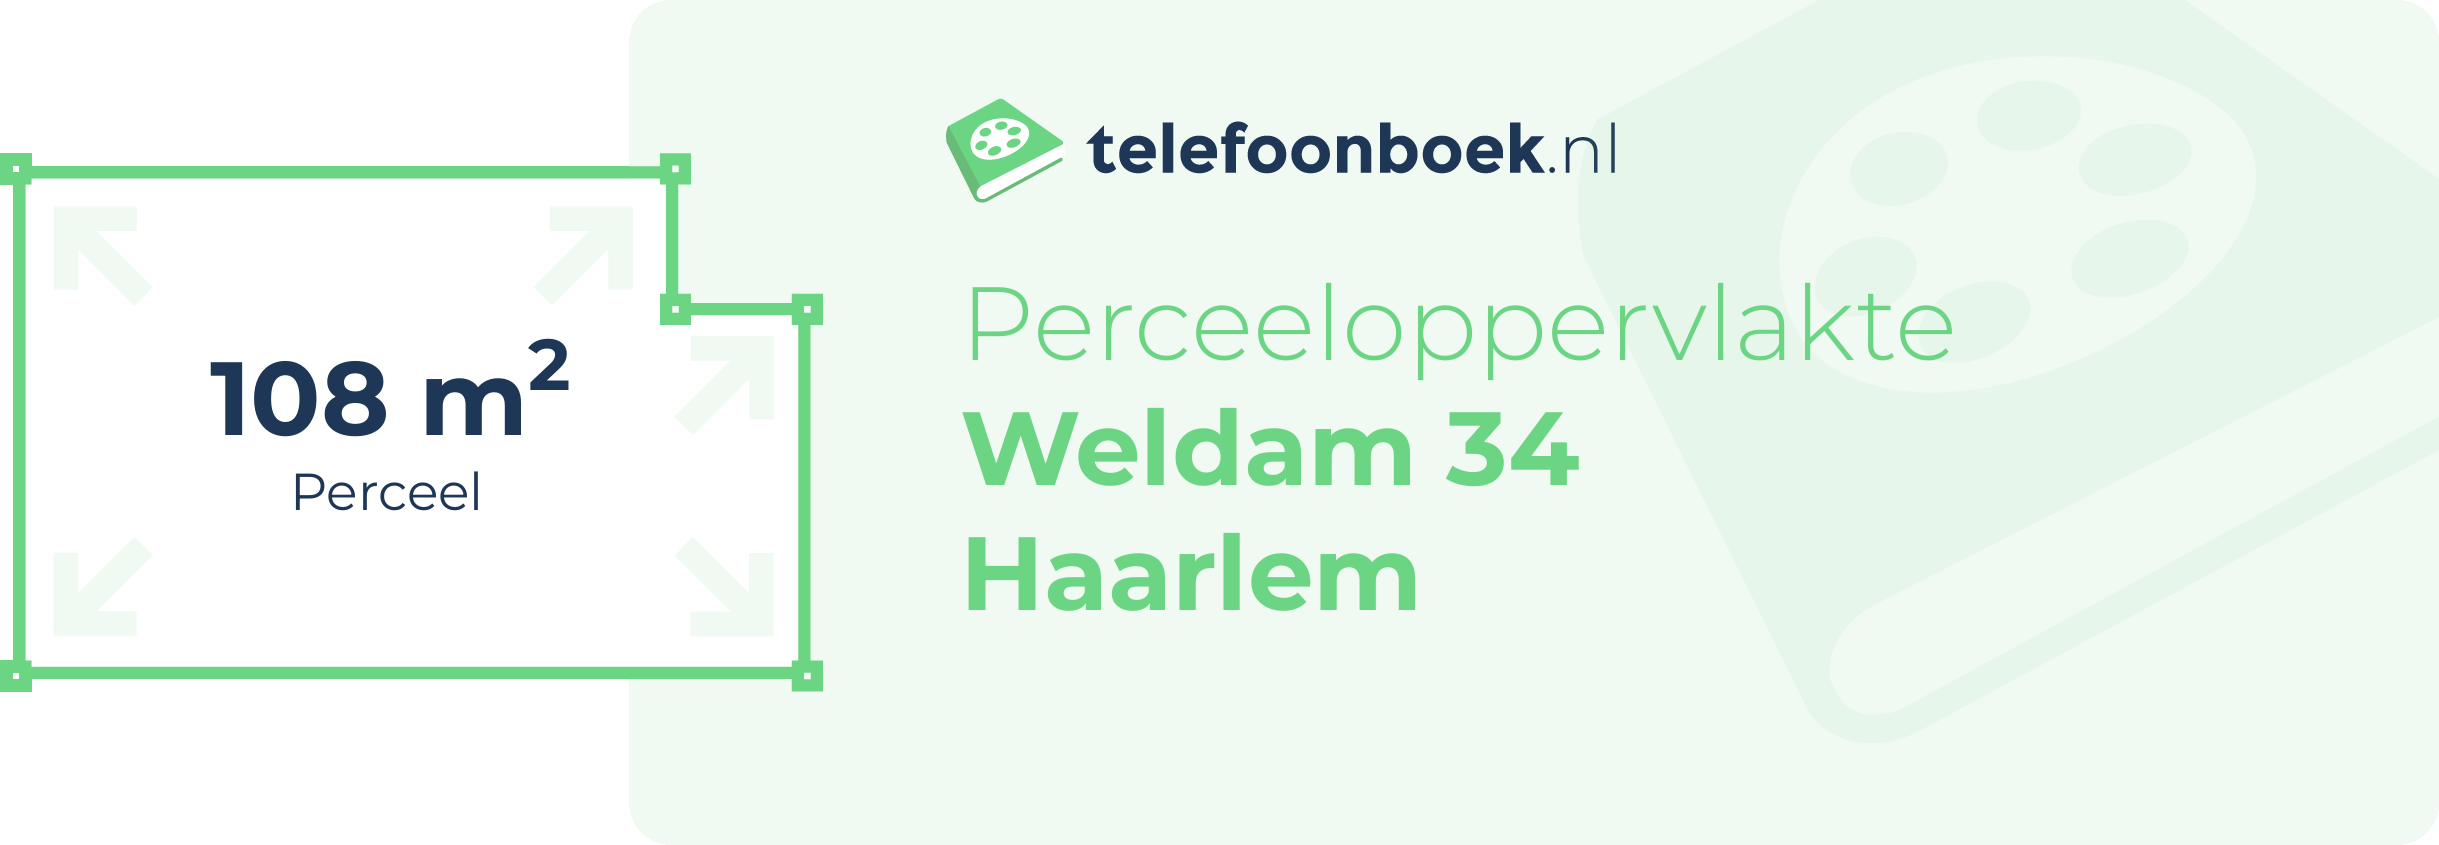 Perceeloppervlakte Weldam 34 Haarlem